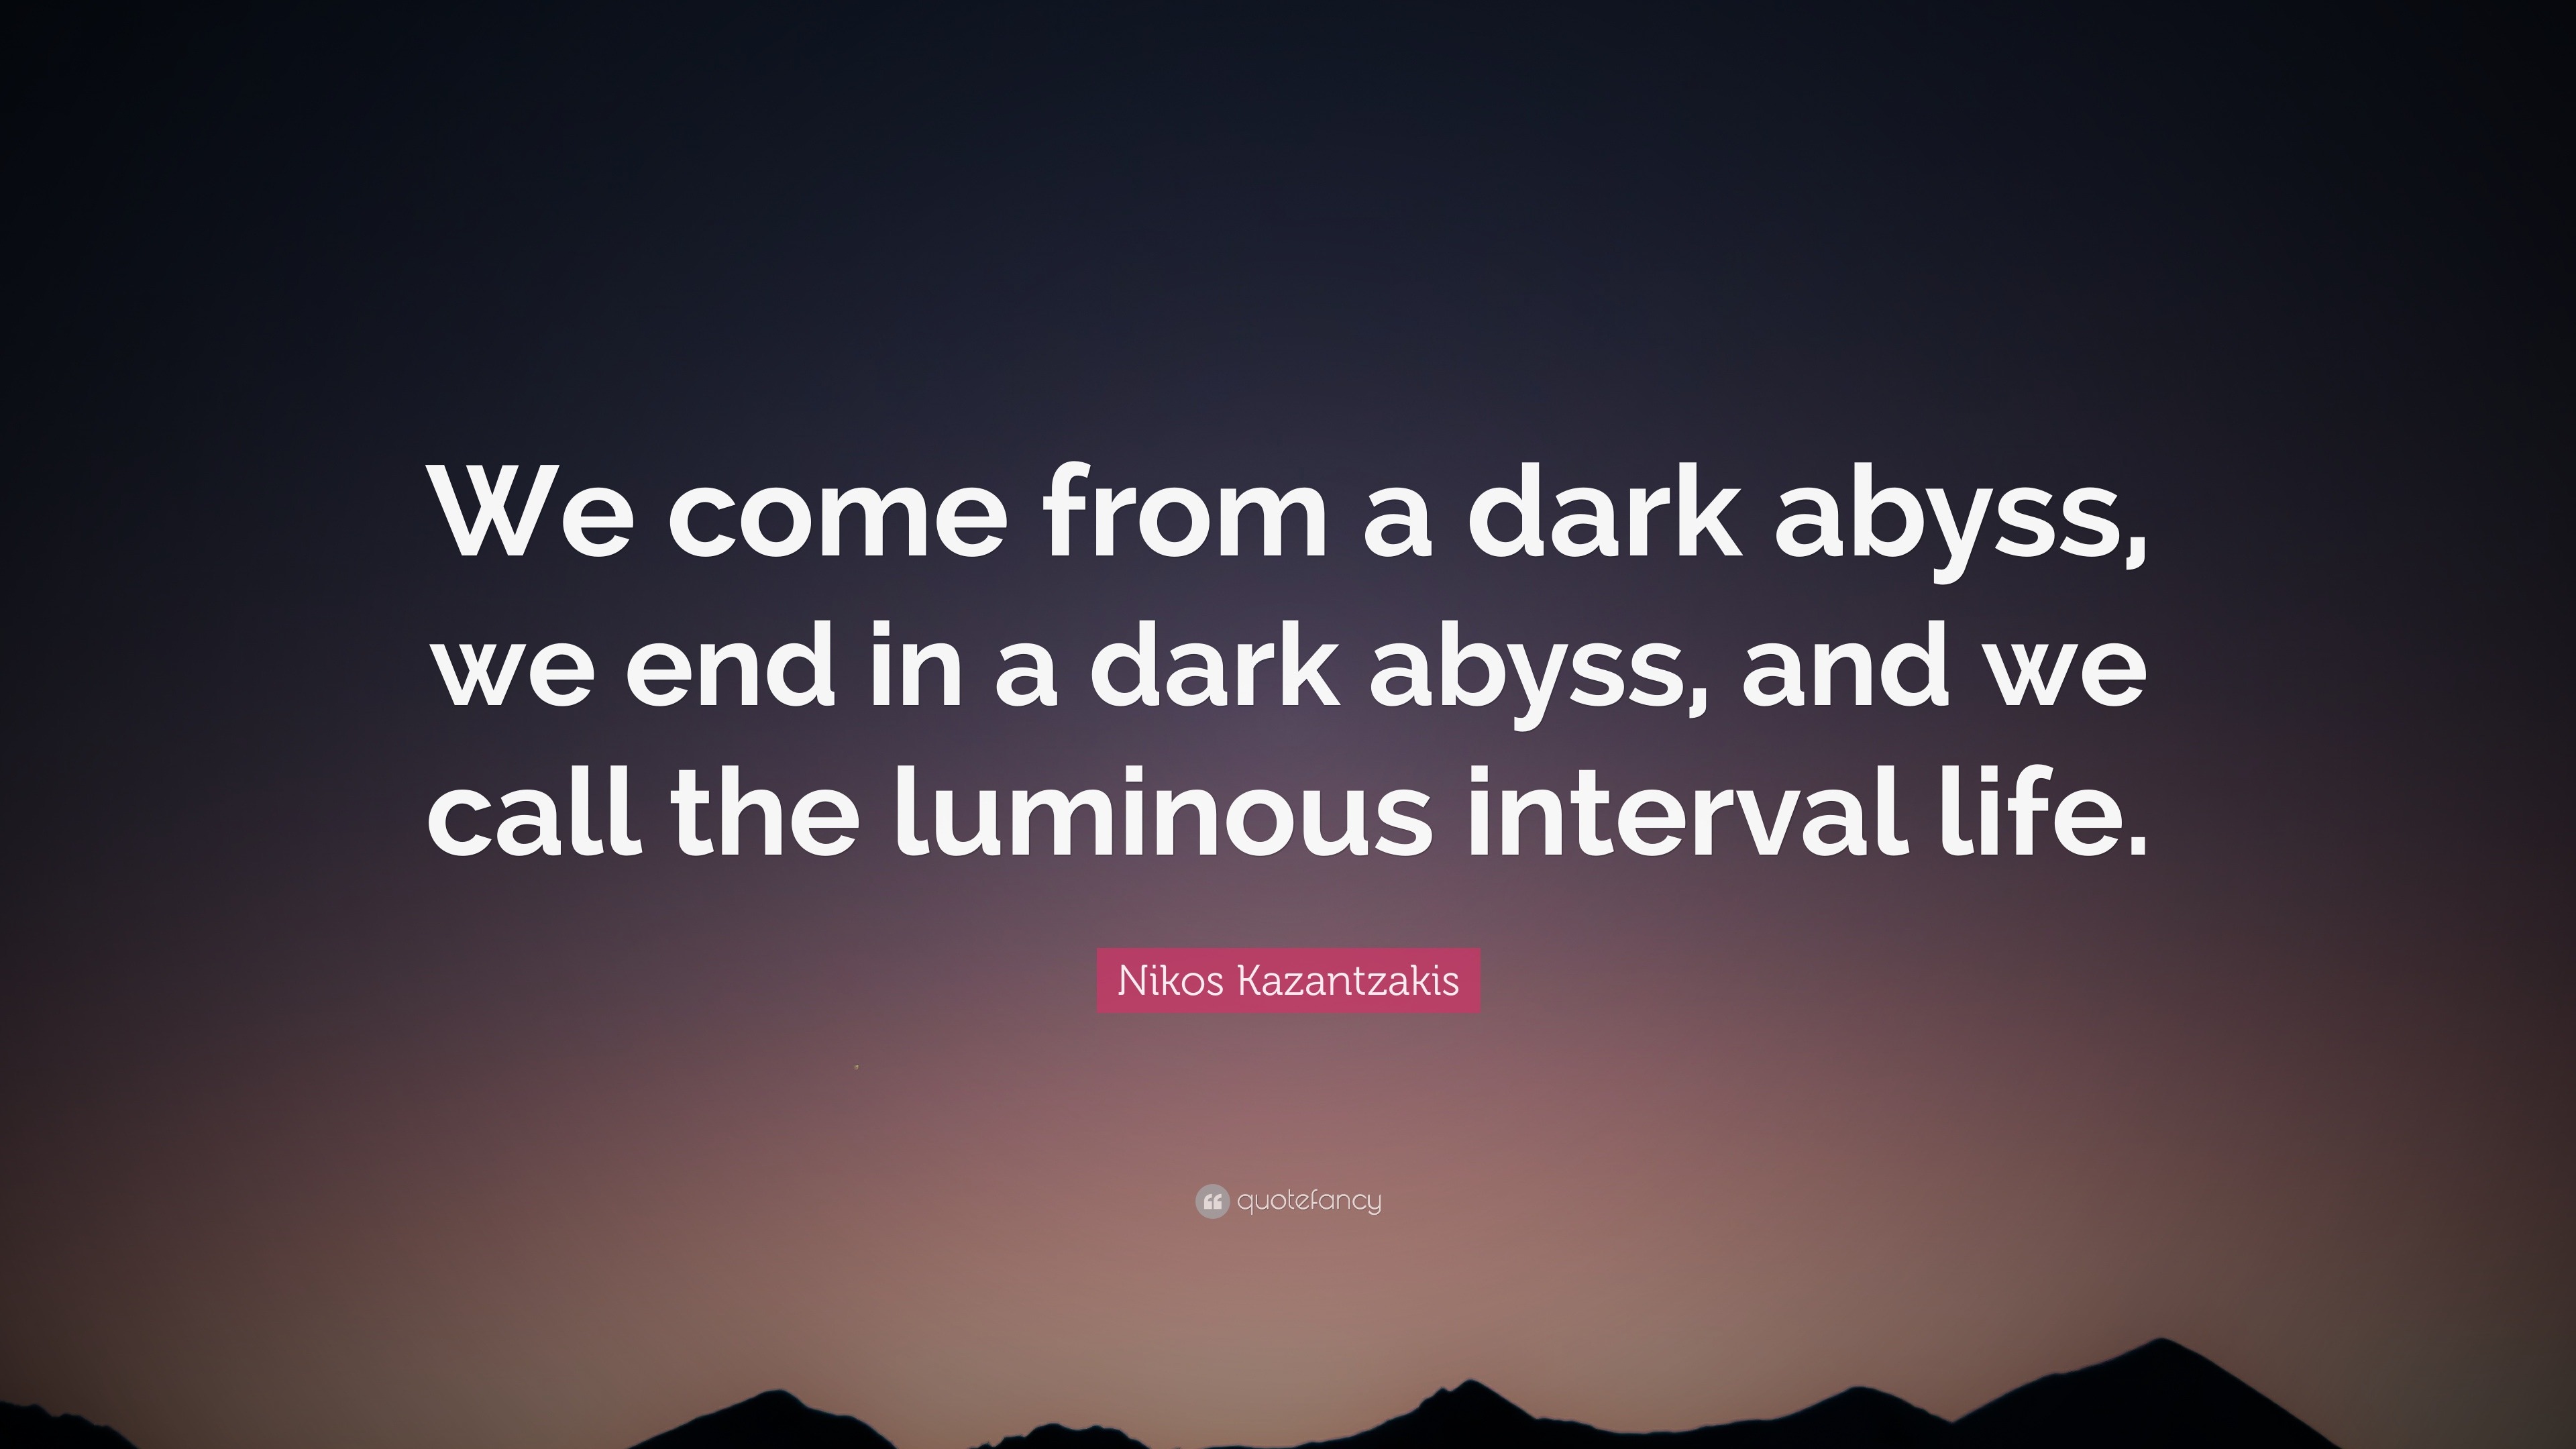 Dark abyss the The Dark